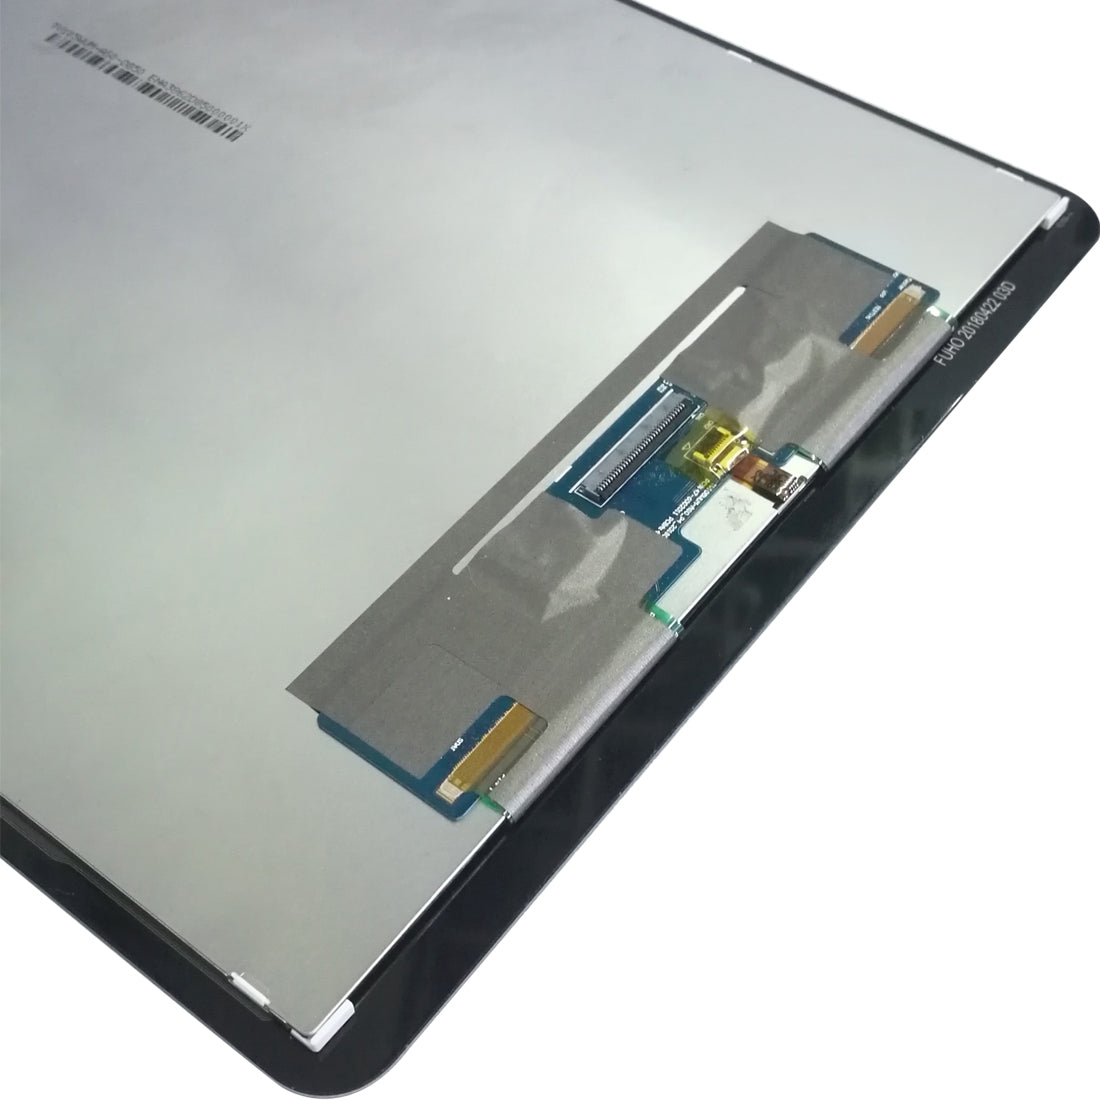 LCD + Touch Screen Samsung Galaxy Tab A 10.5 T590 (WiFi Version) Black